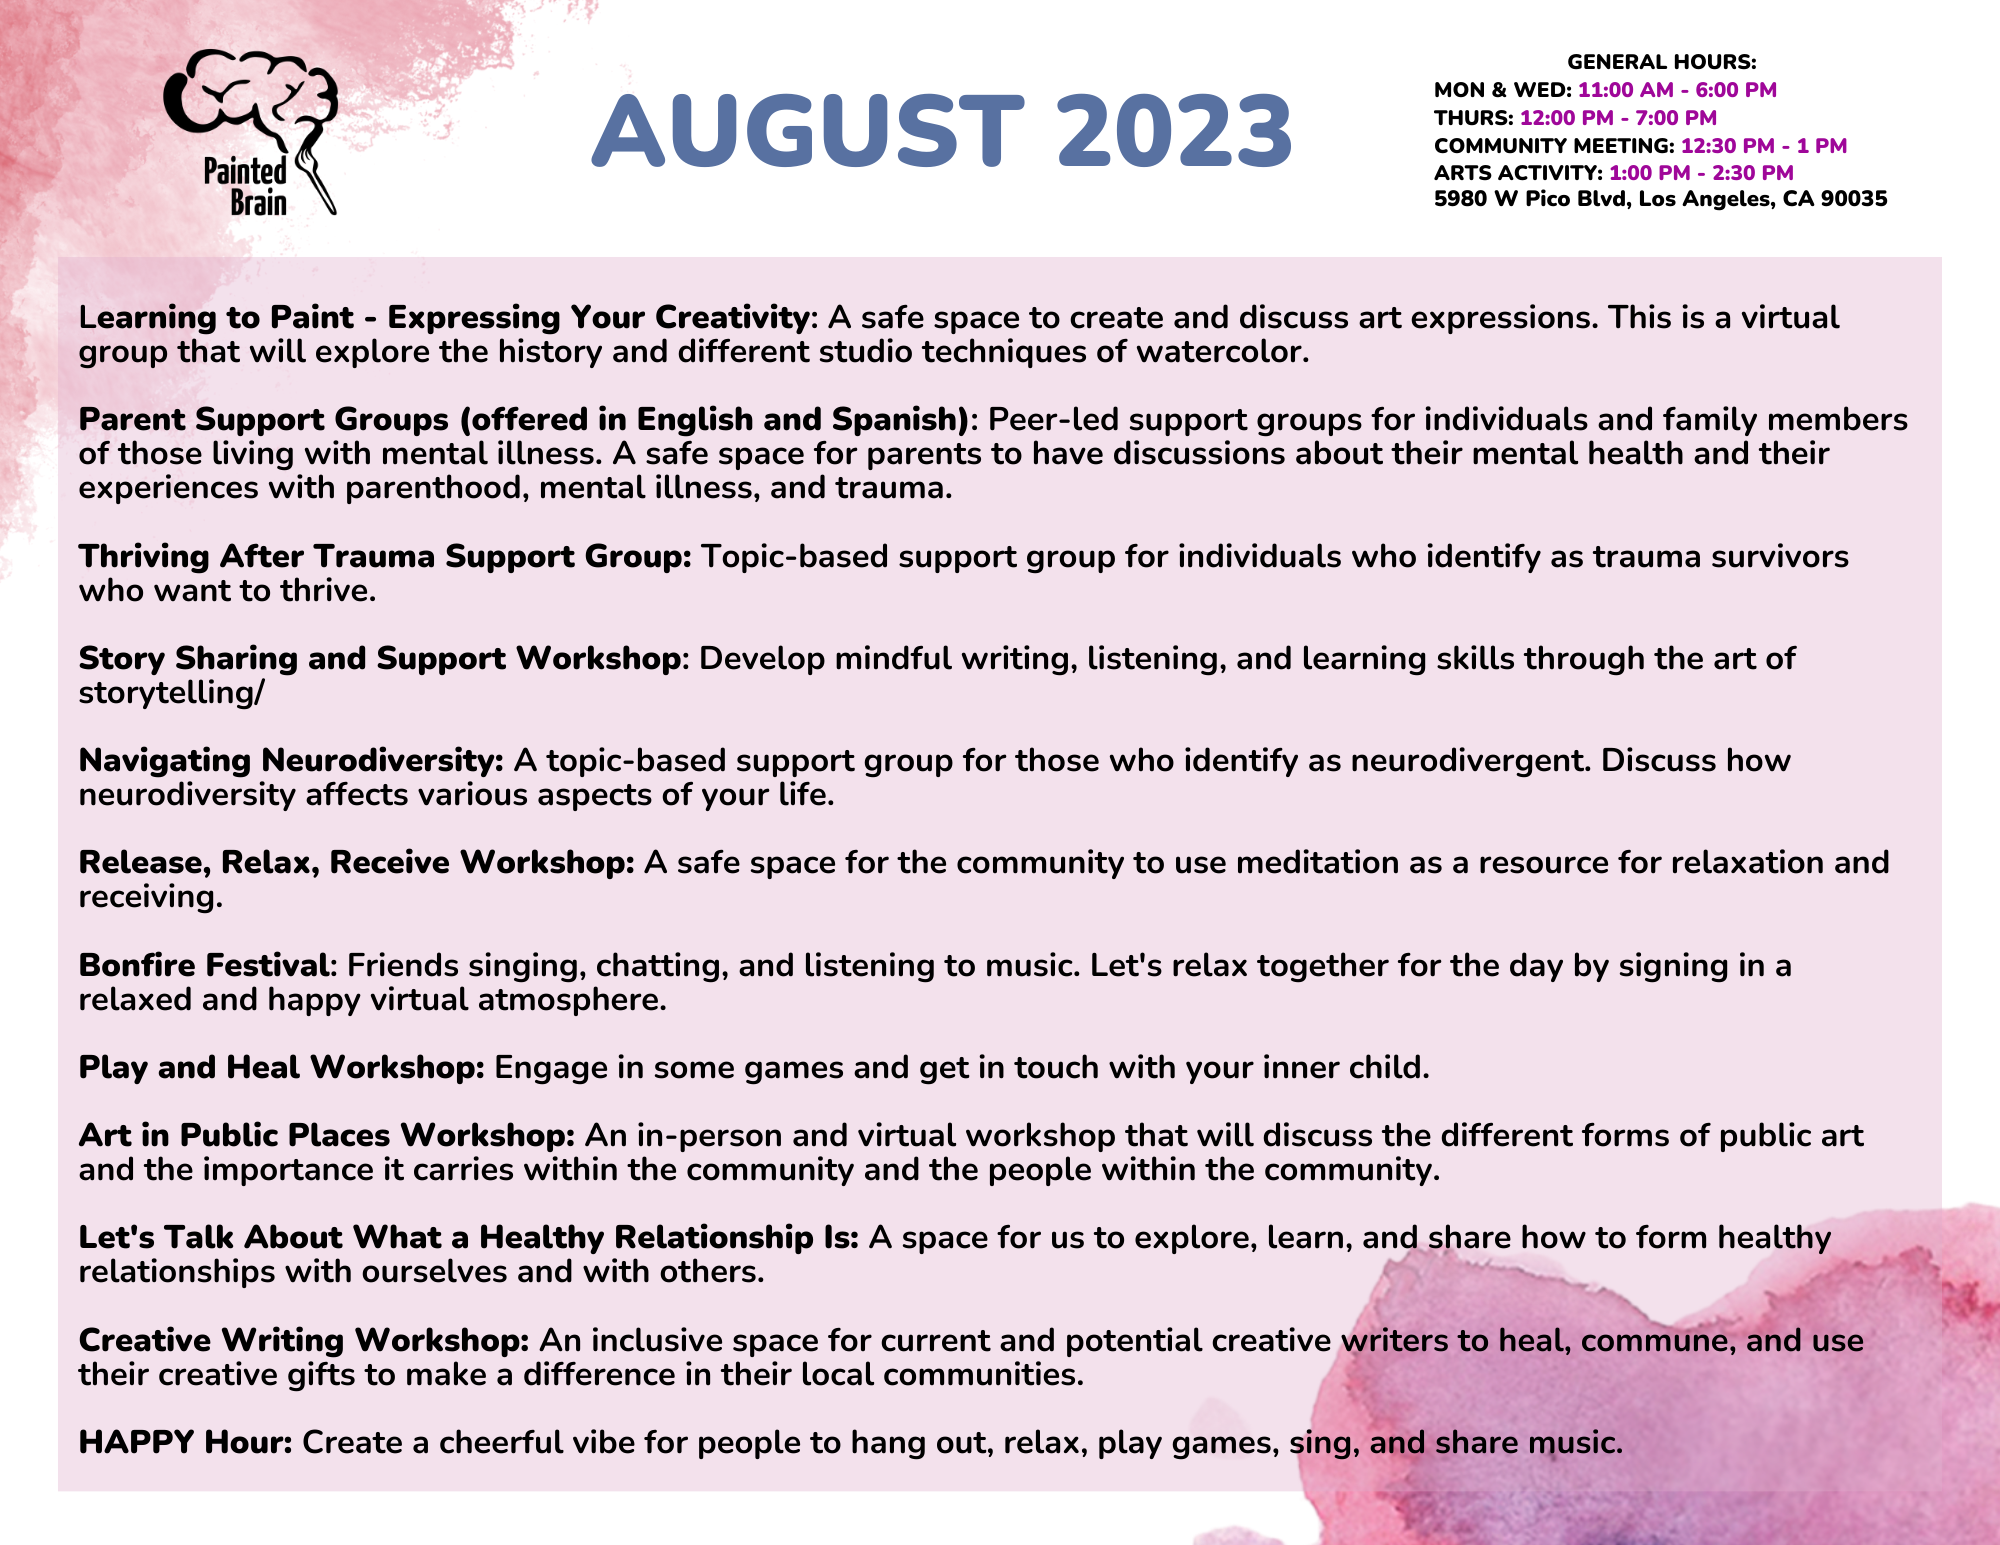 PB August 2023 Calendar page2